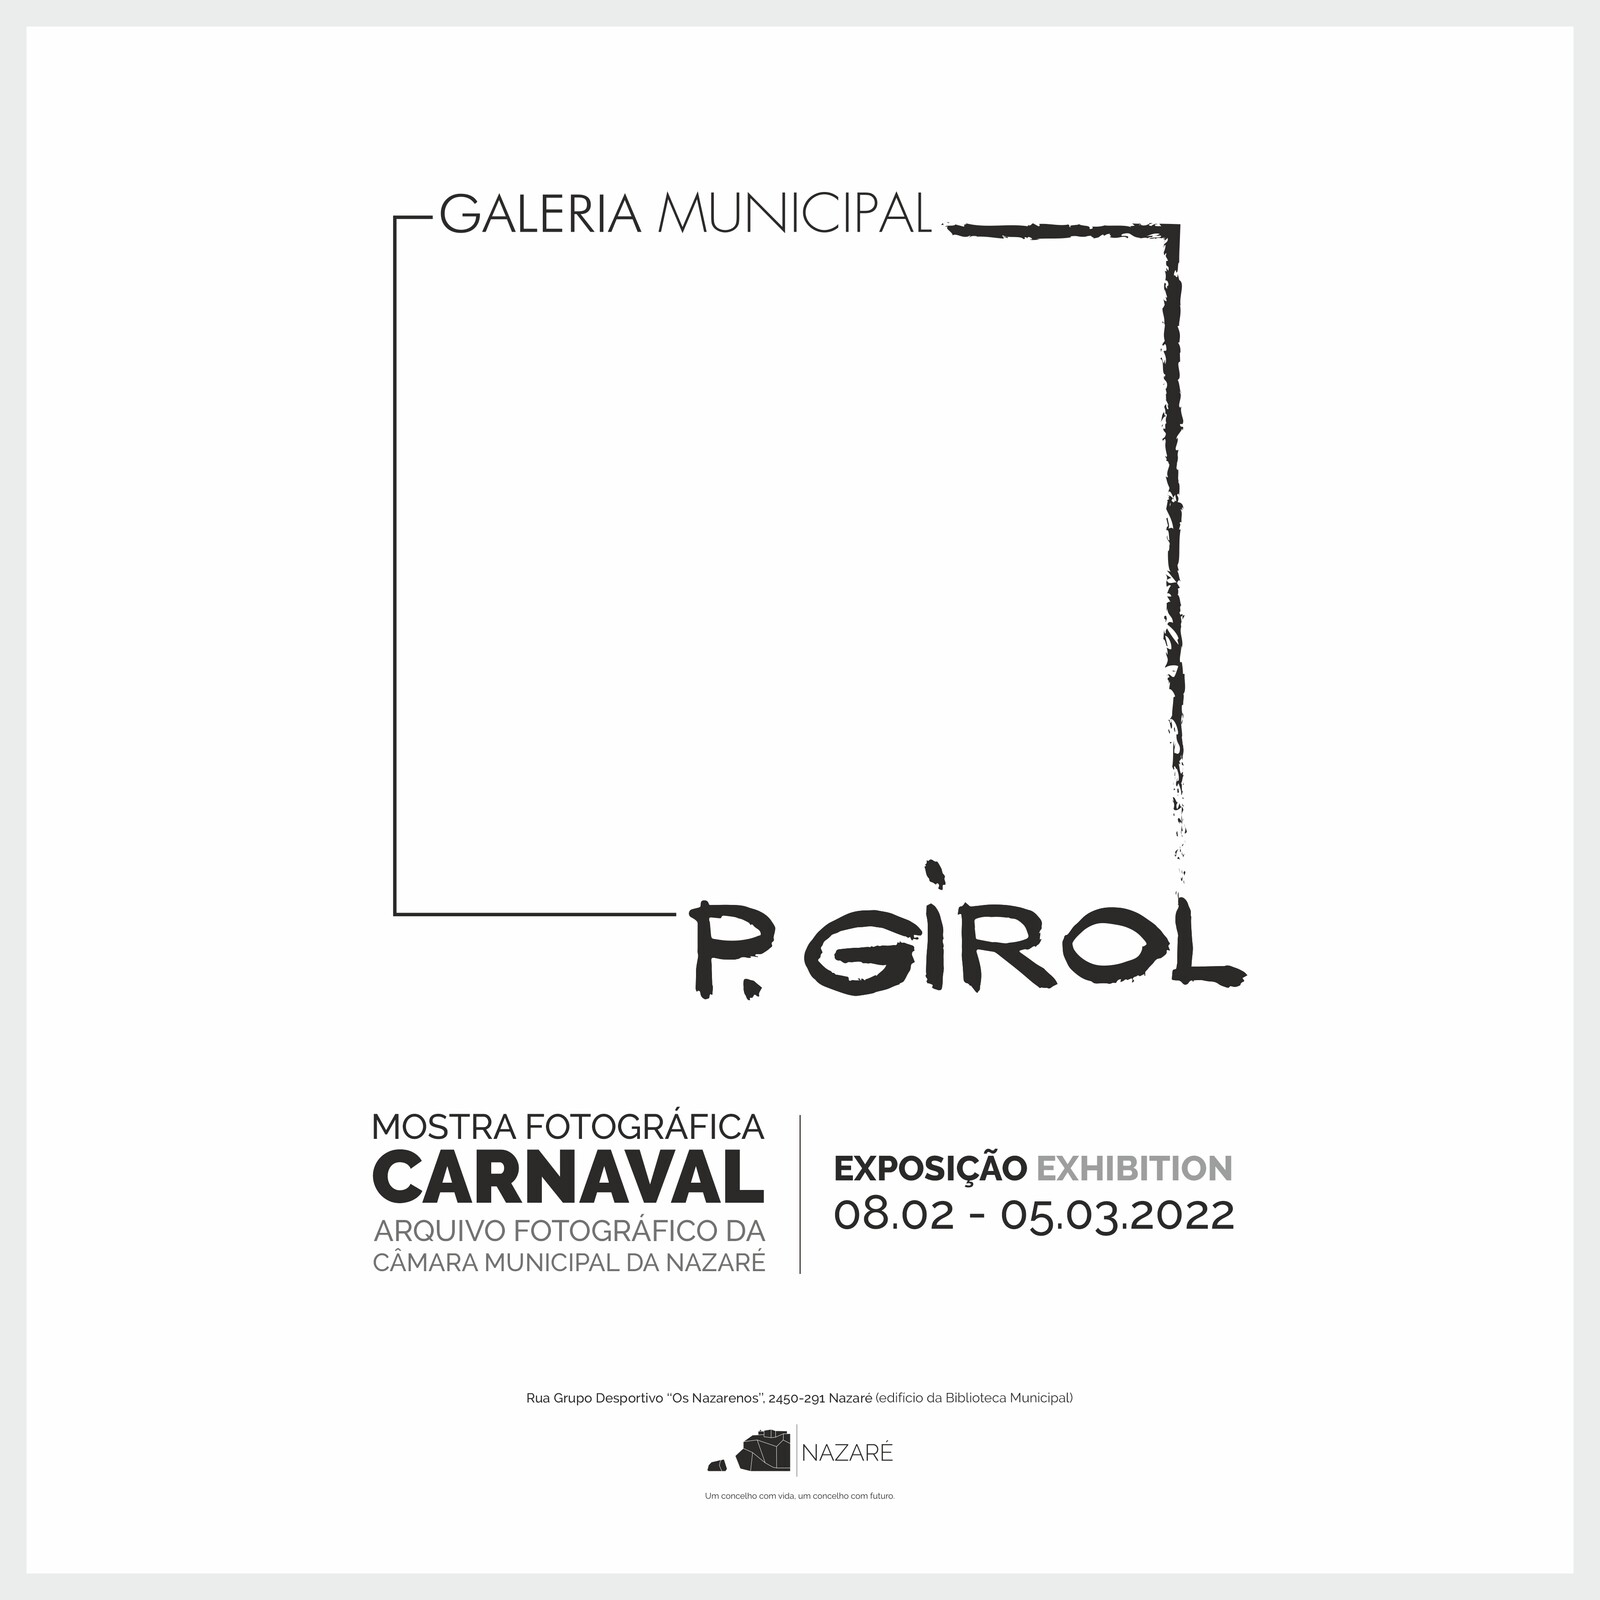 Mostra de Carnaval na Galeria Municipal Paul Girol 